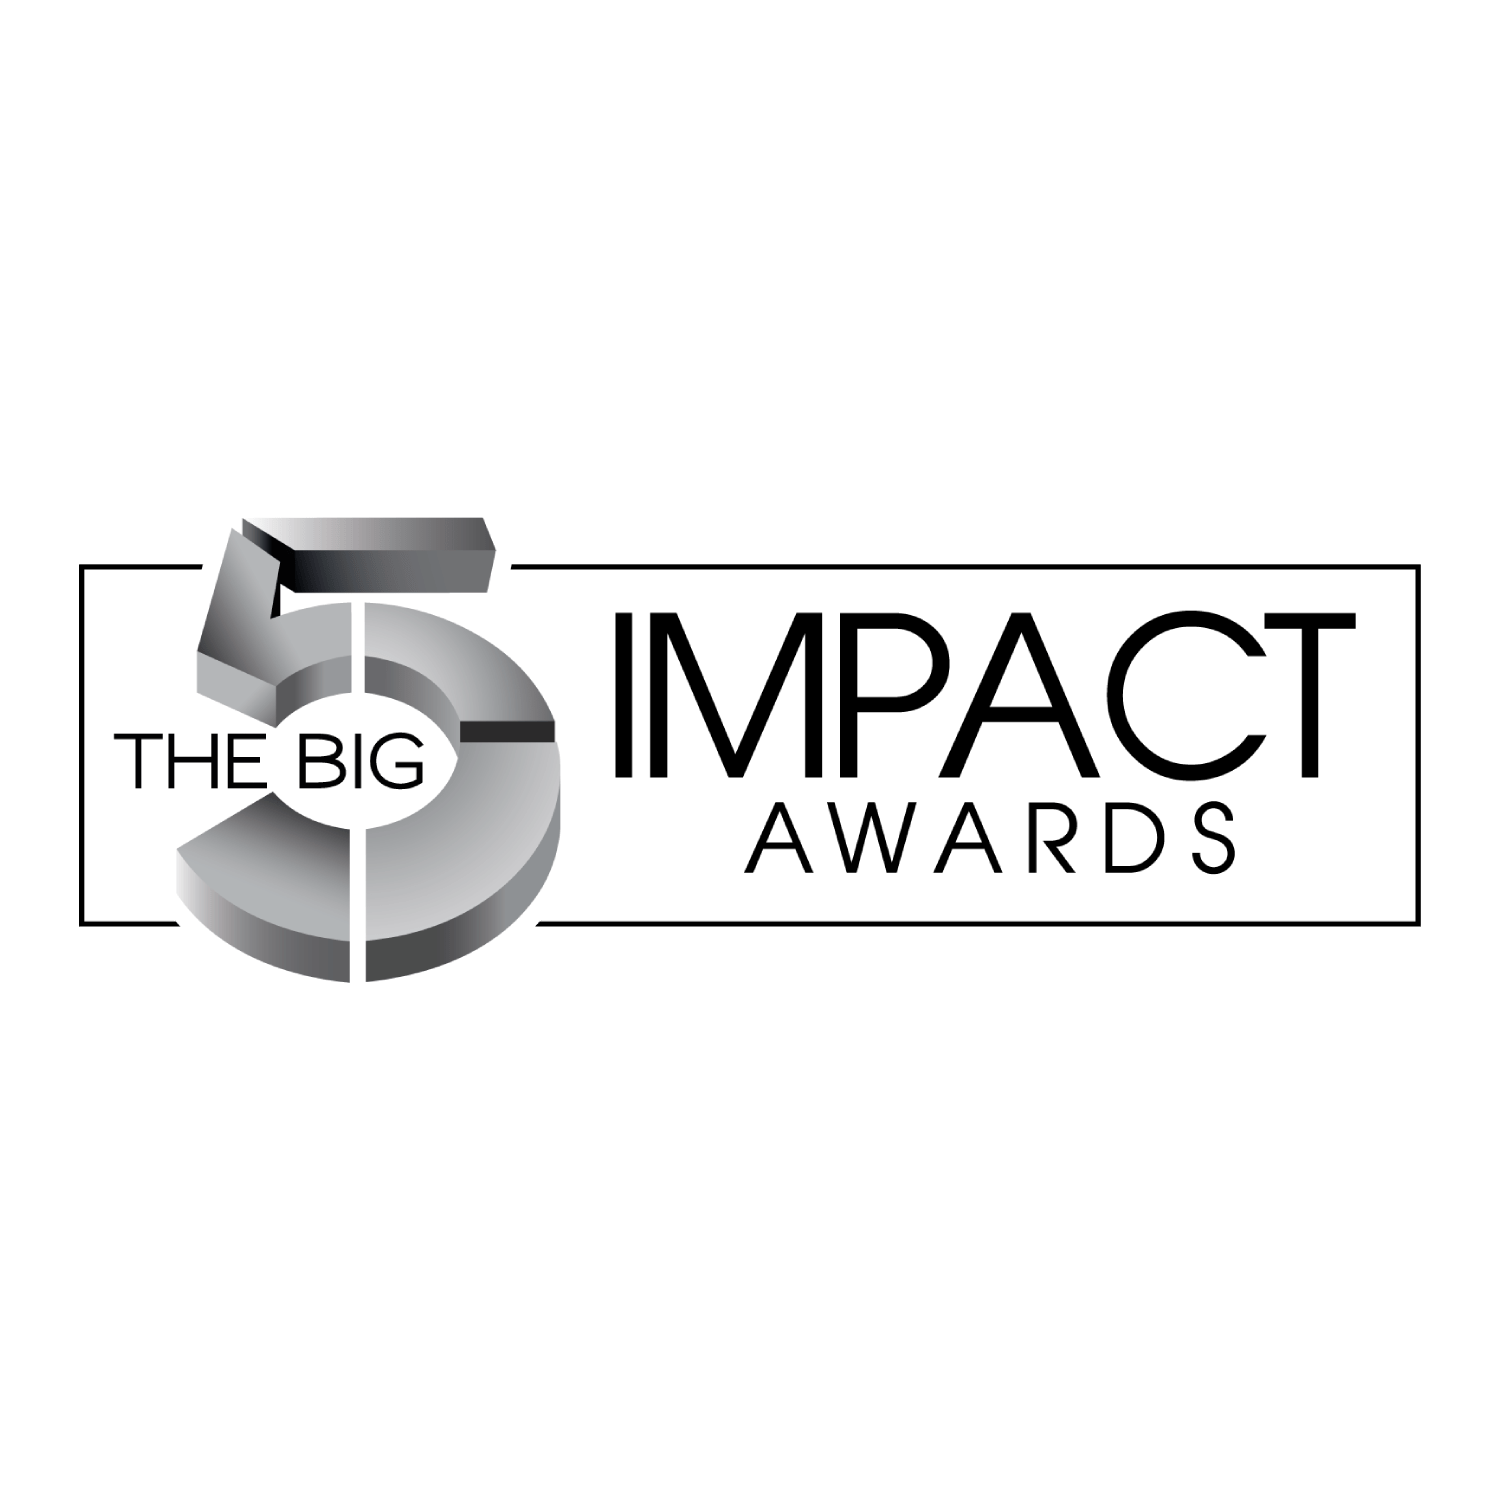 The Big 5 Impact Awards logo